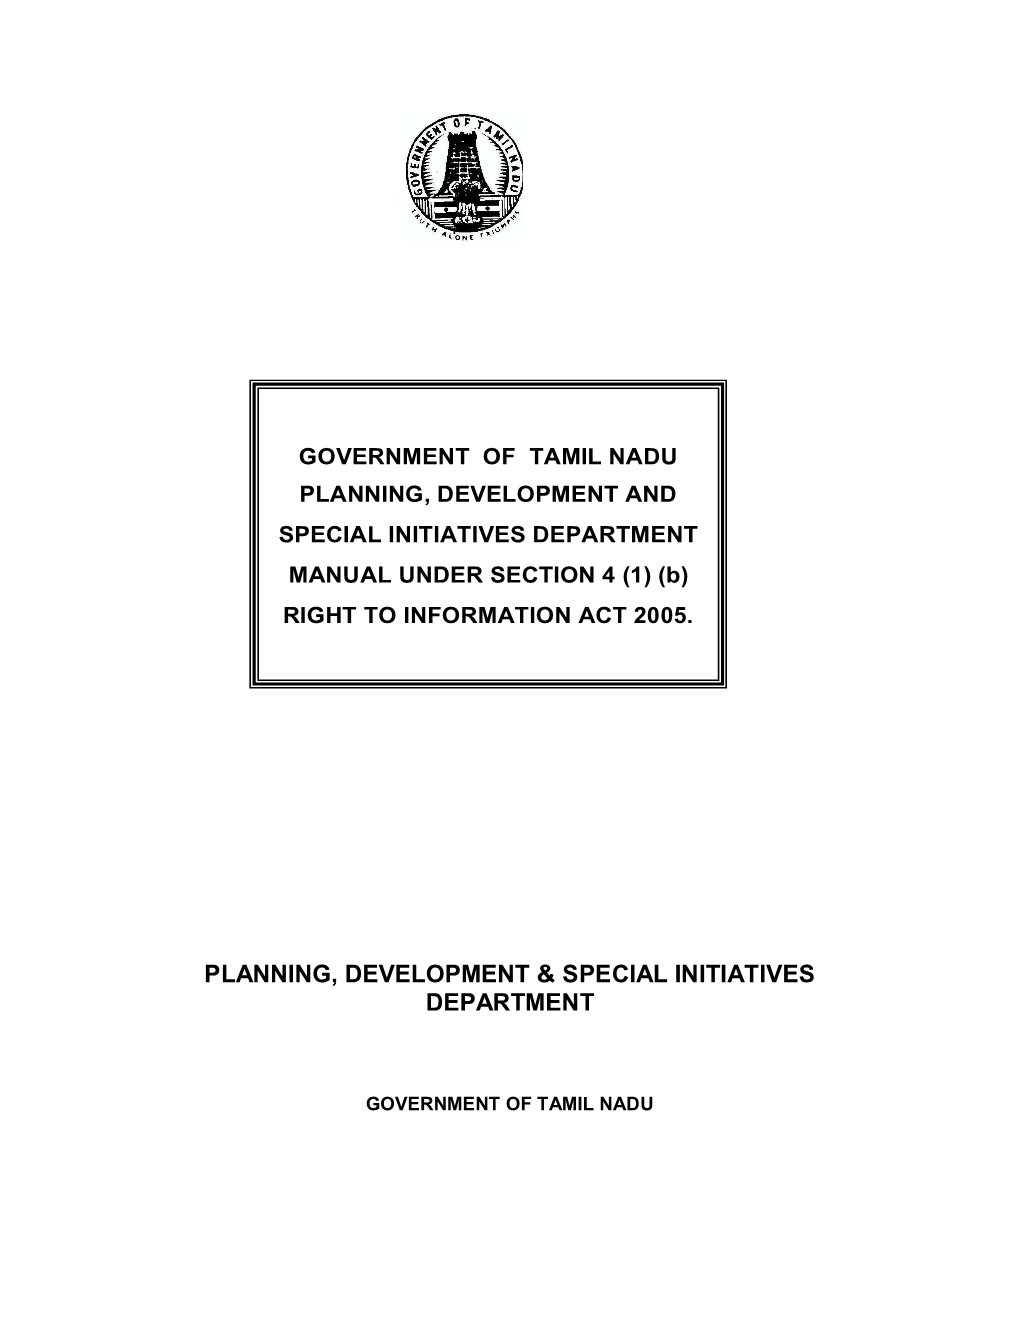 Planning, Development & Special Initiatives Department